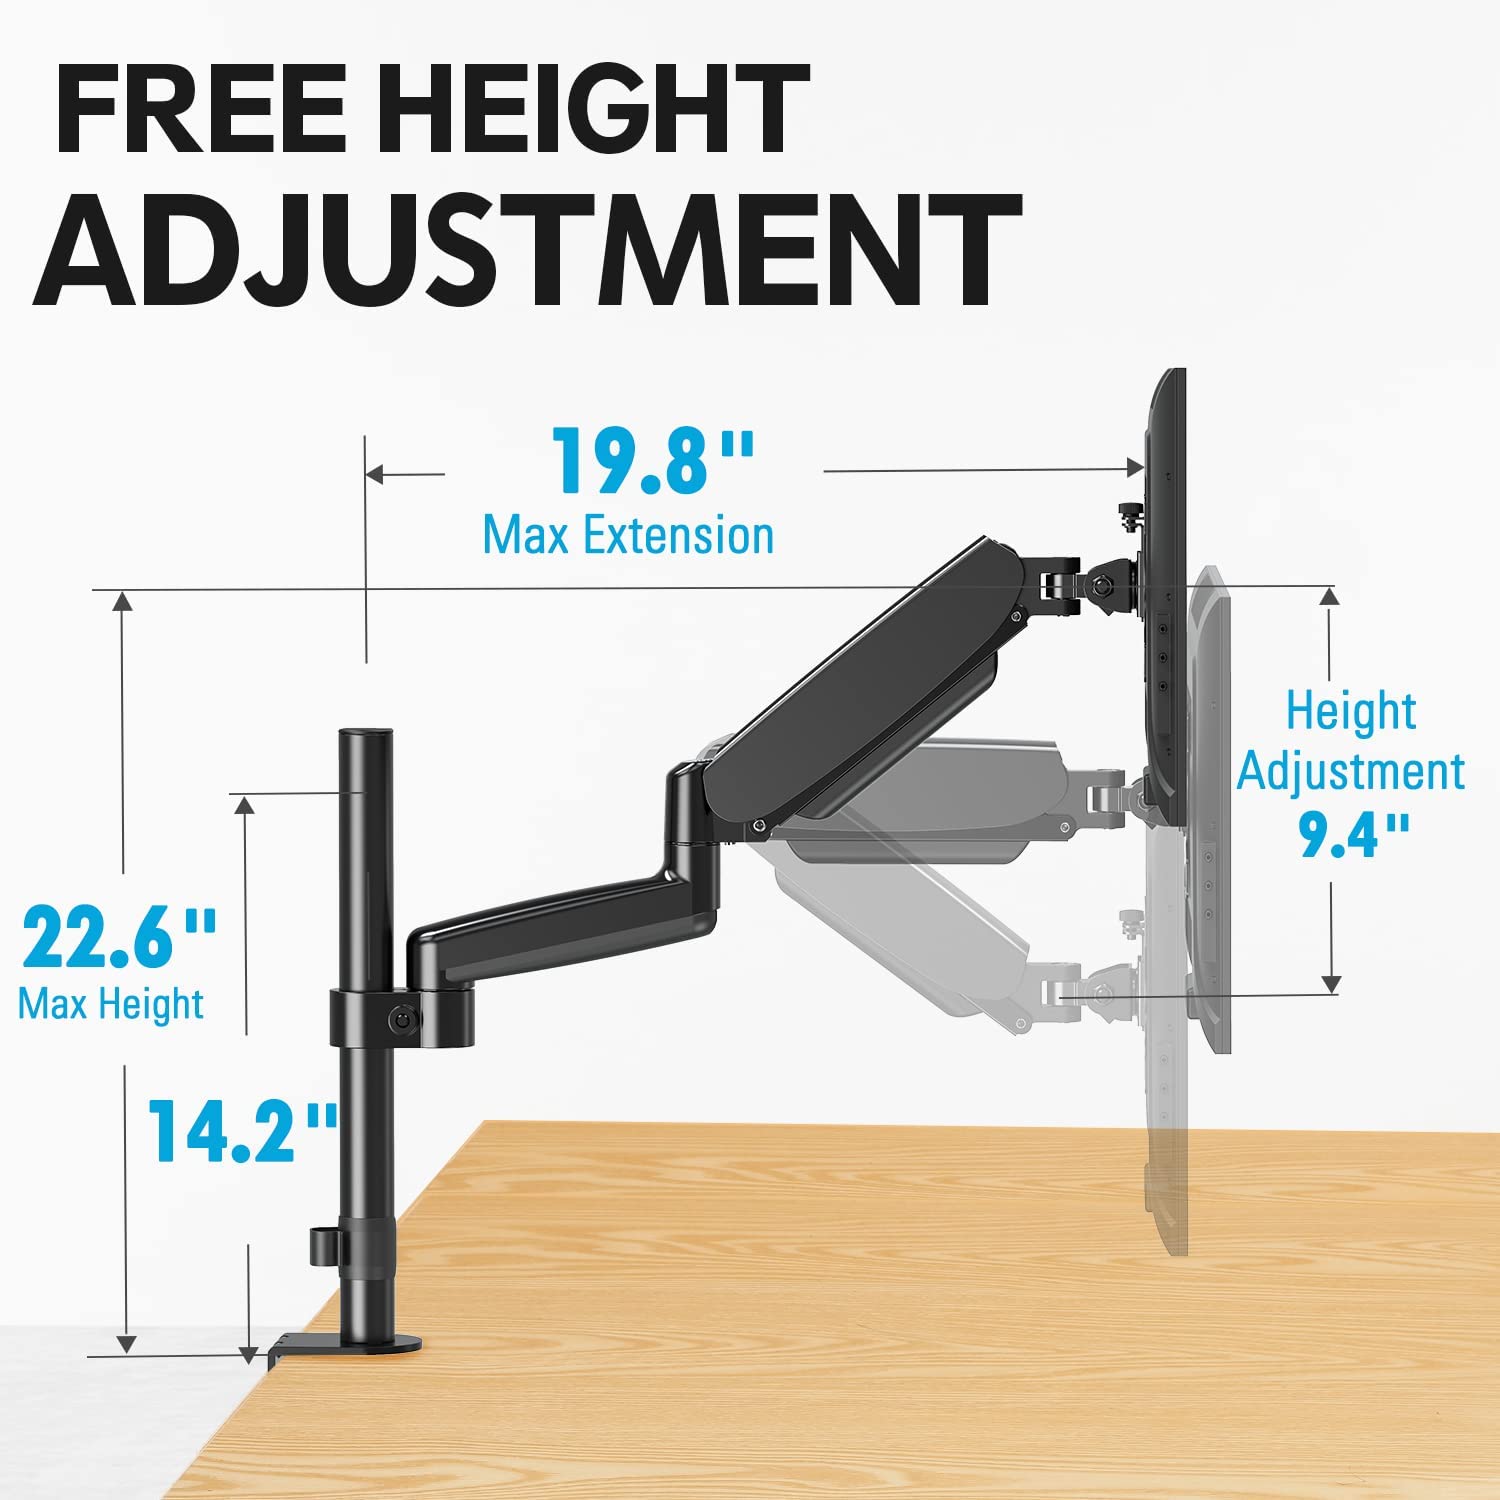 free 9.4'' height adjustment 